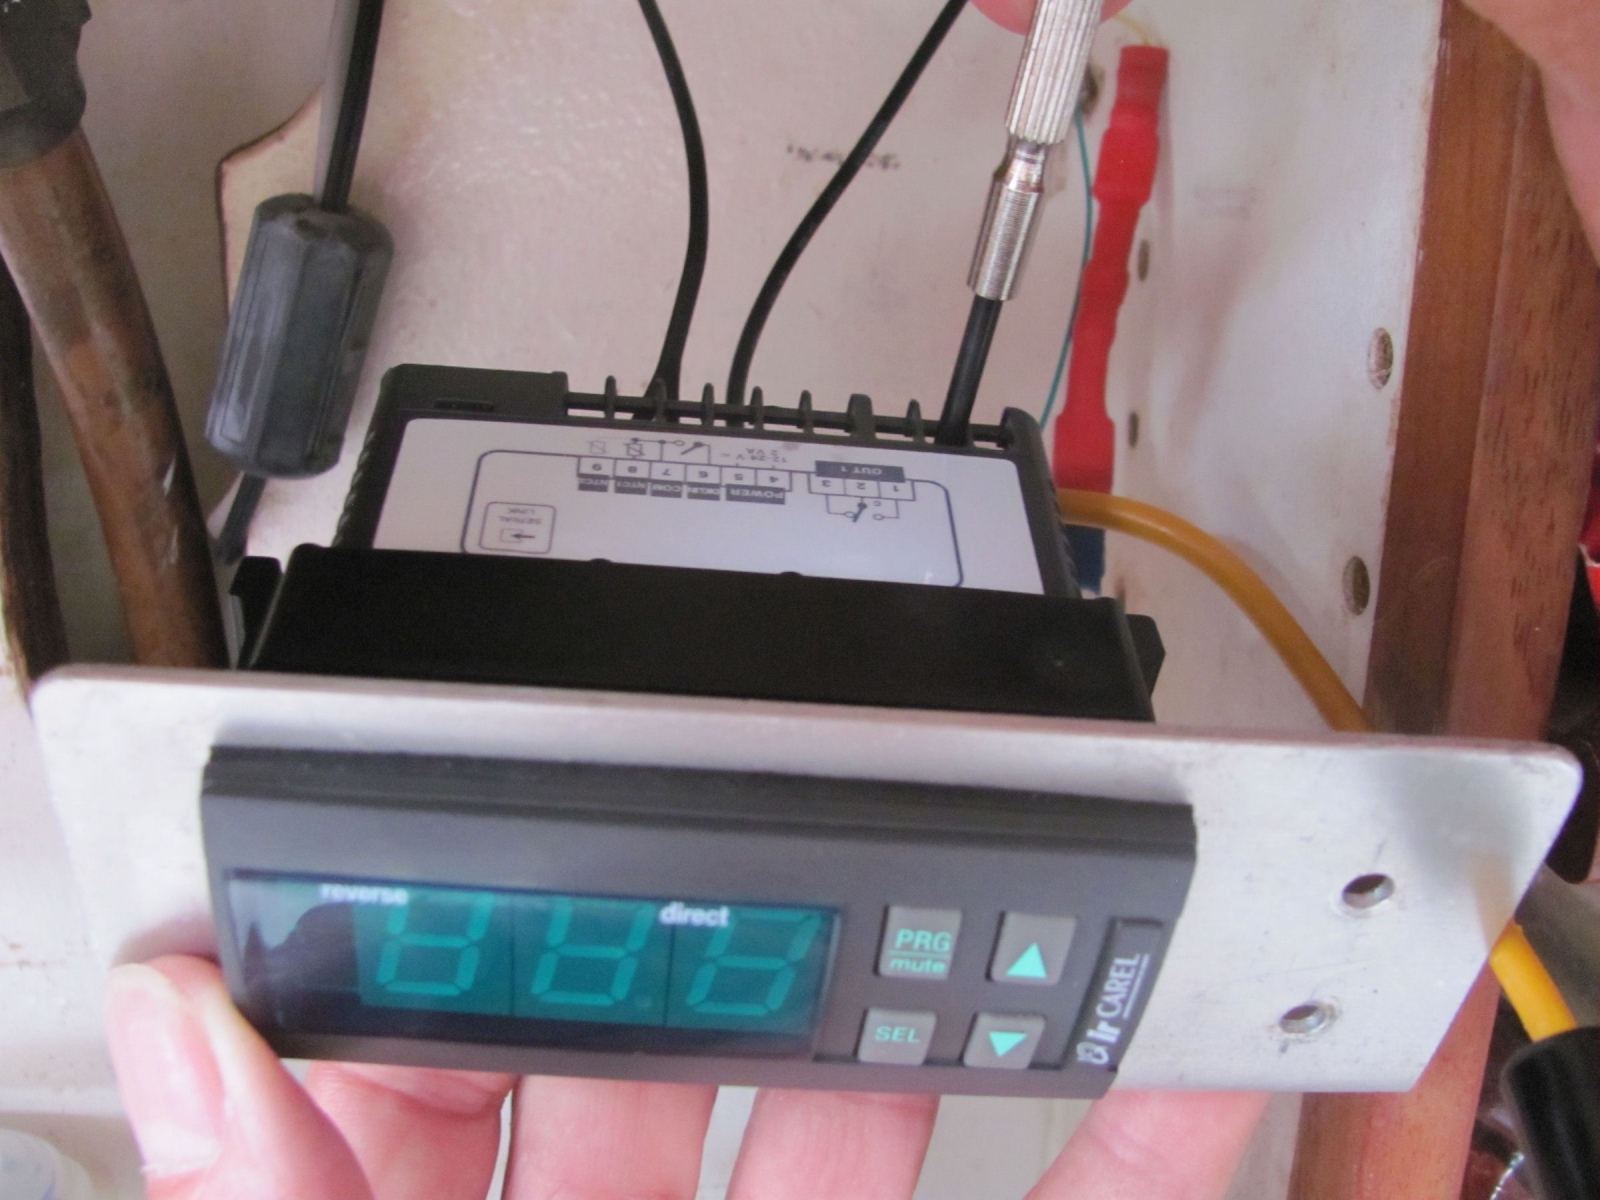 Adding an electronic refrigerator thermostat - Ocean Navigator